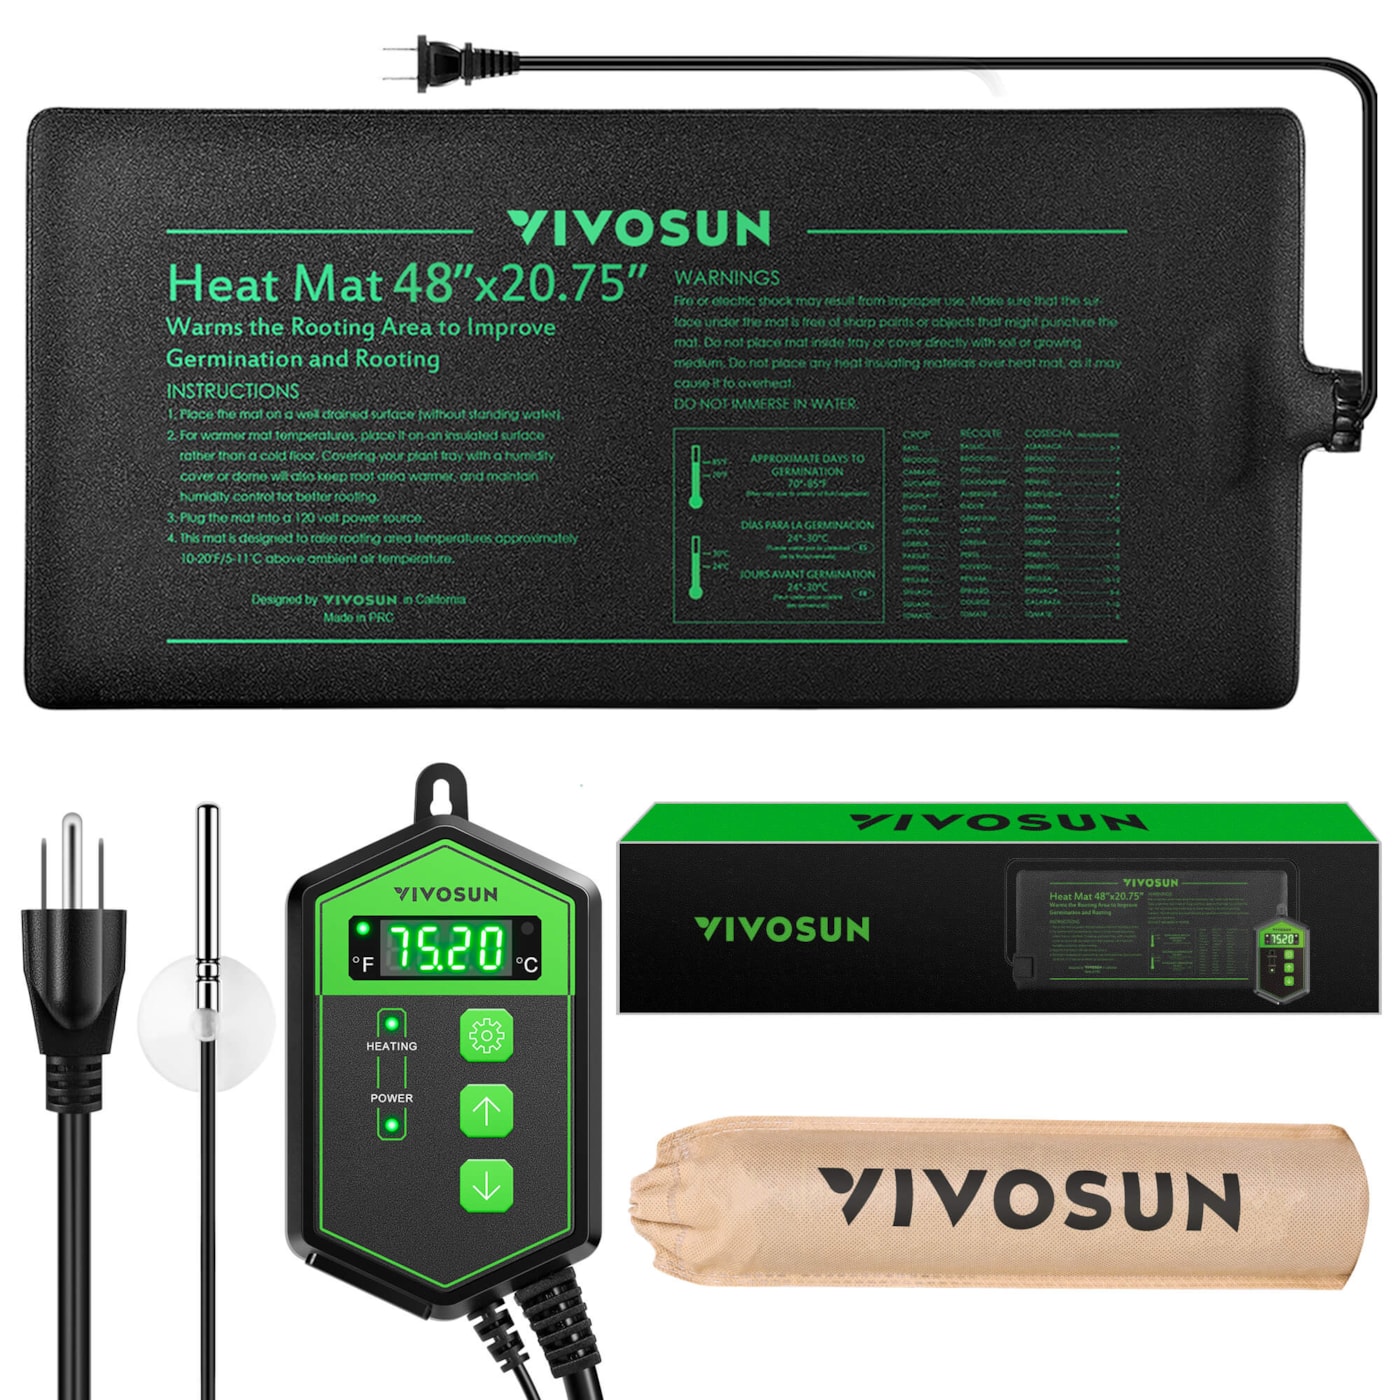 VIVOSUN Seedling Heat Mat Digital Thermostat Combo 48"x20.75"